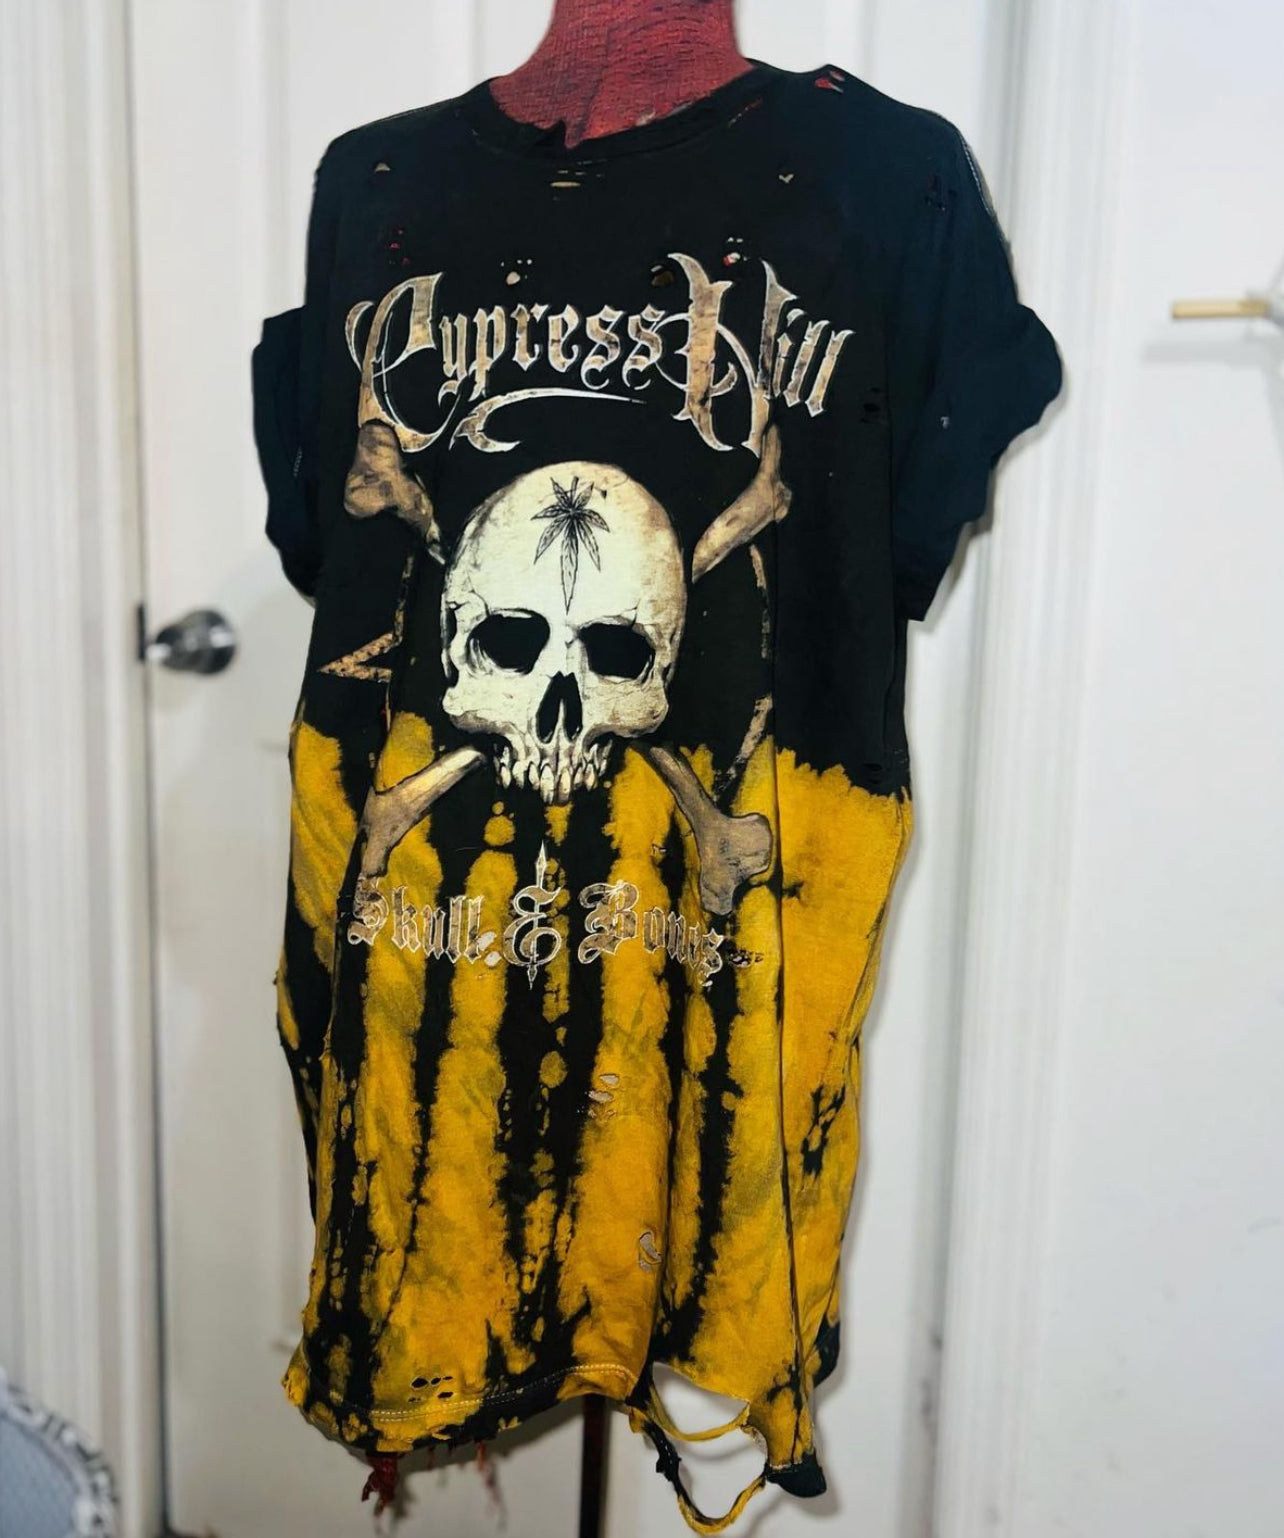 Cypress Hill “Skull & Bones” Oversized Tie Dye Distressed Tee